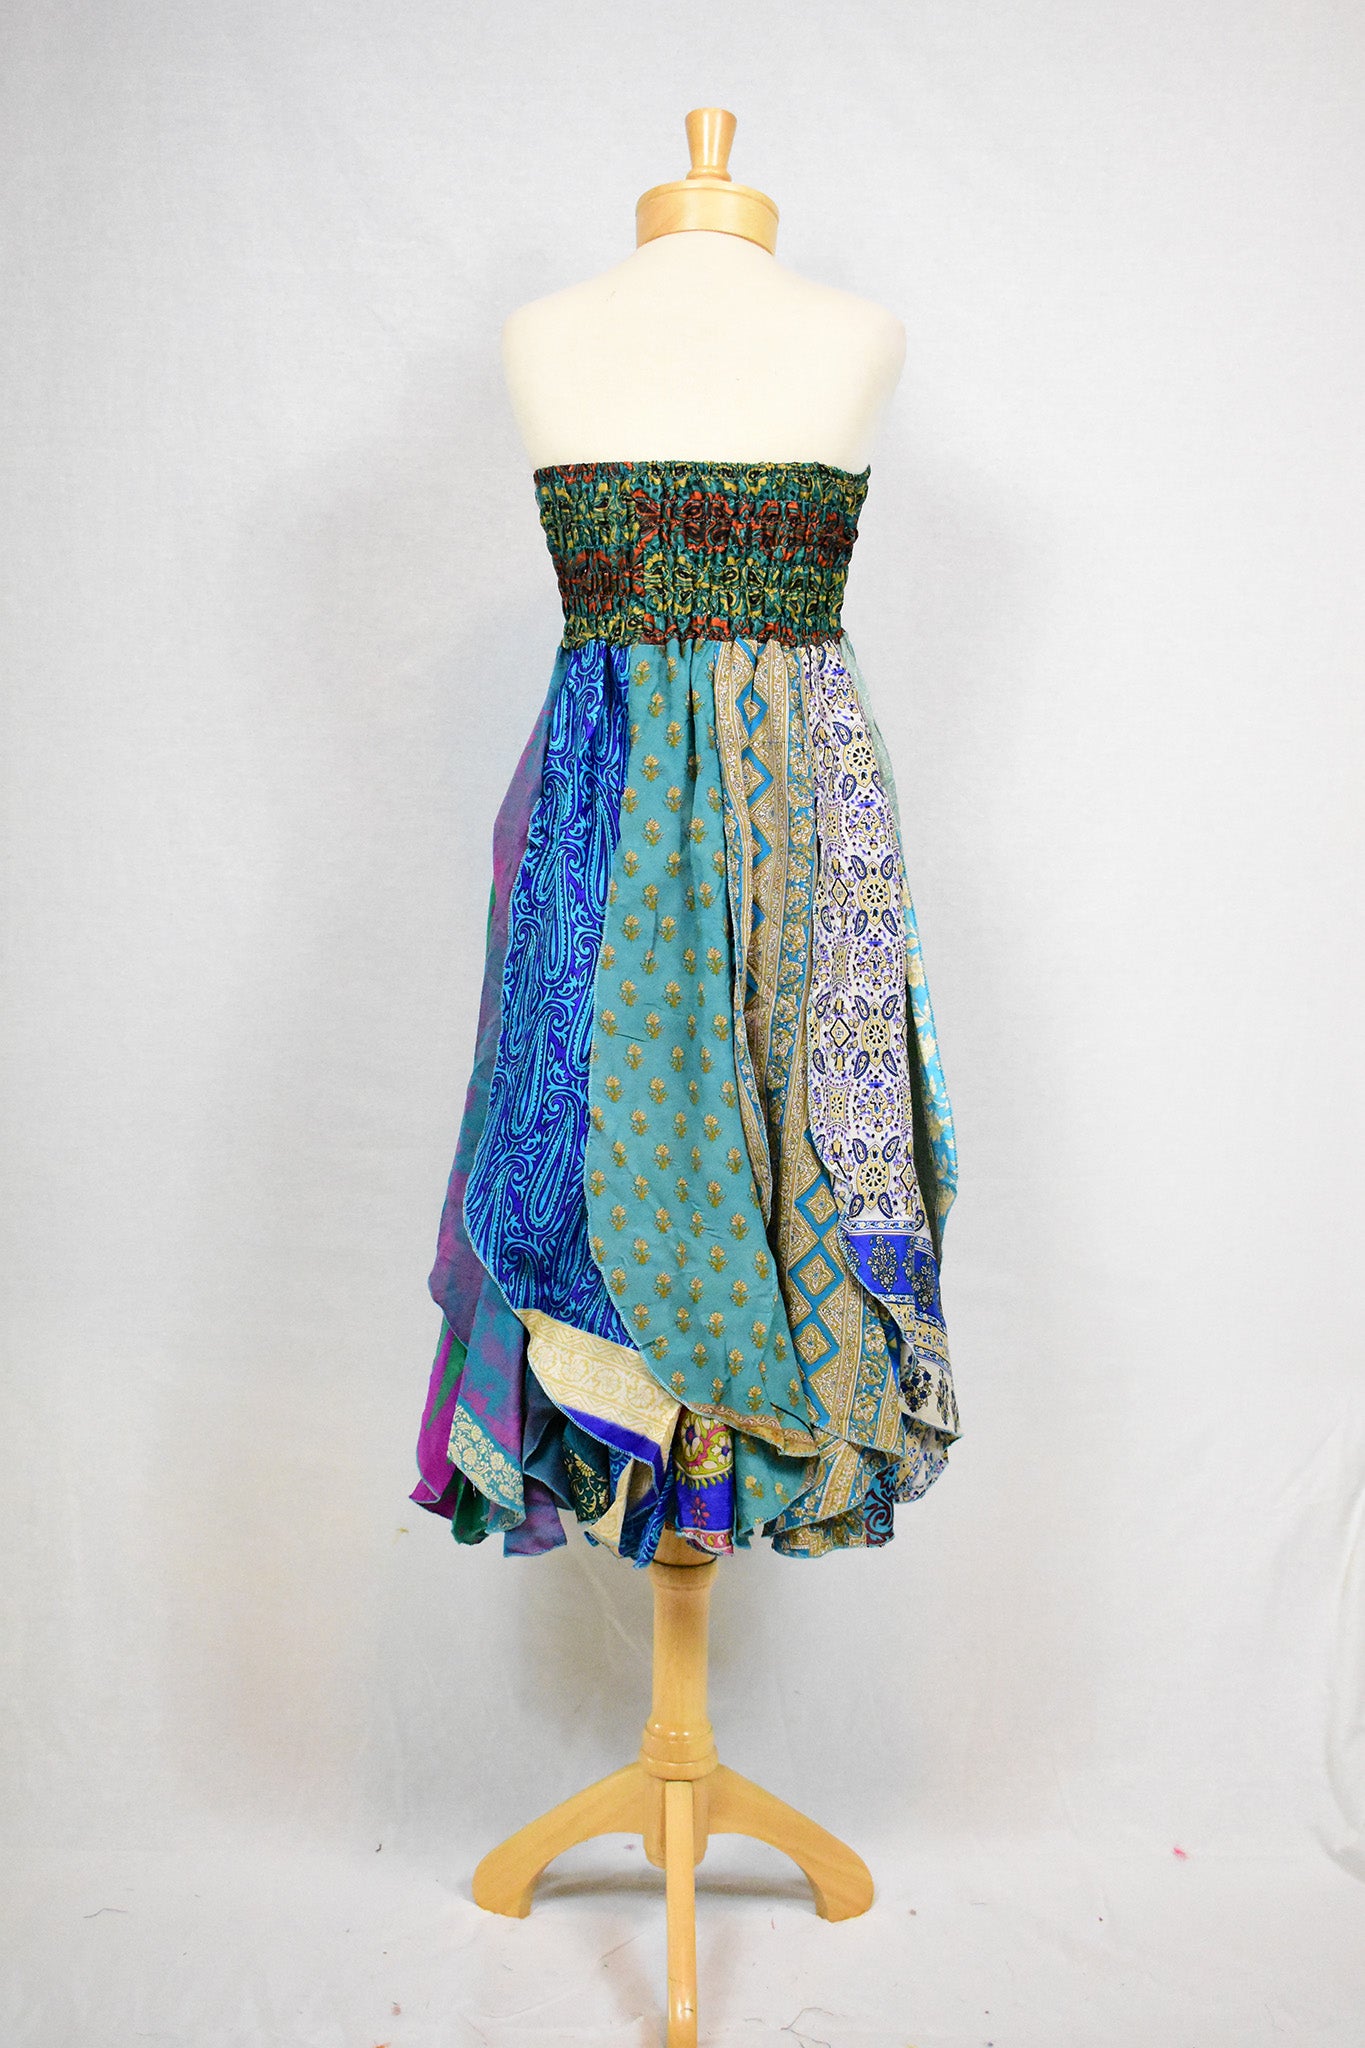 Fairy Dress Ruffle Skirt 5 Back View